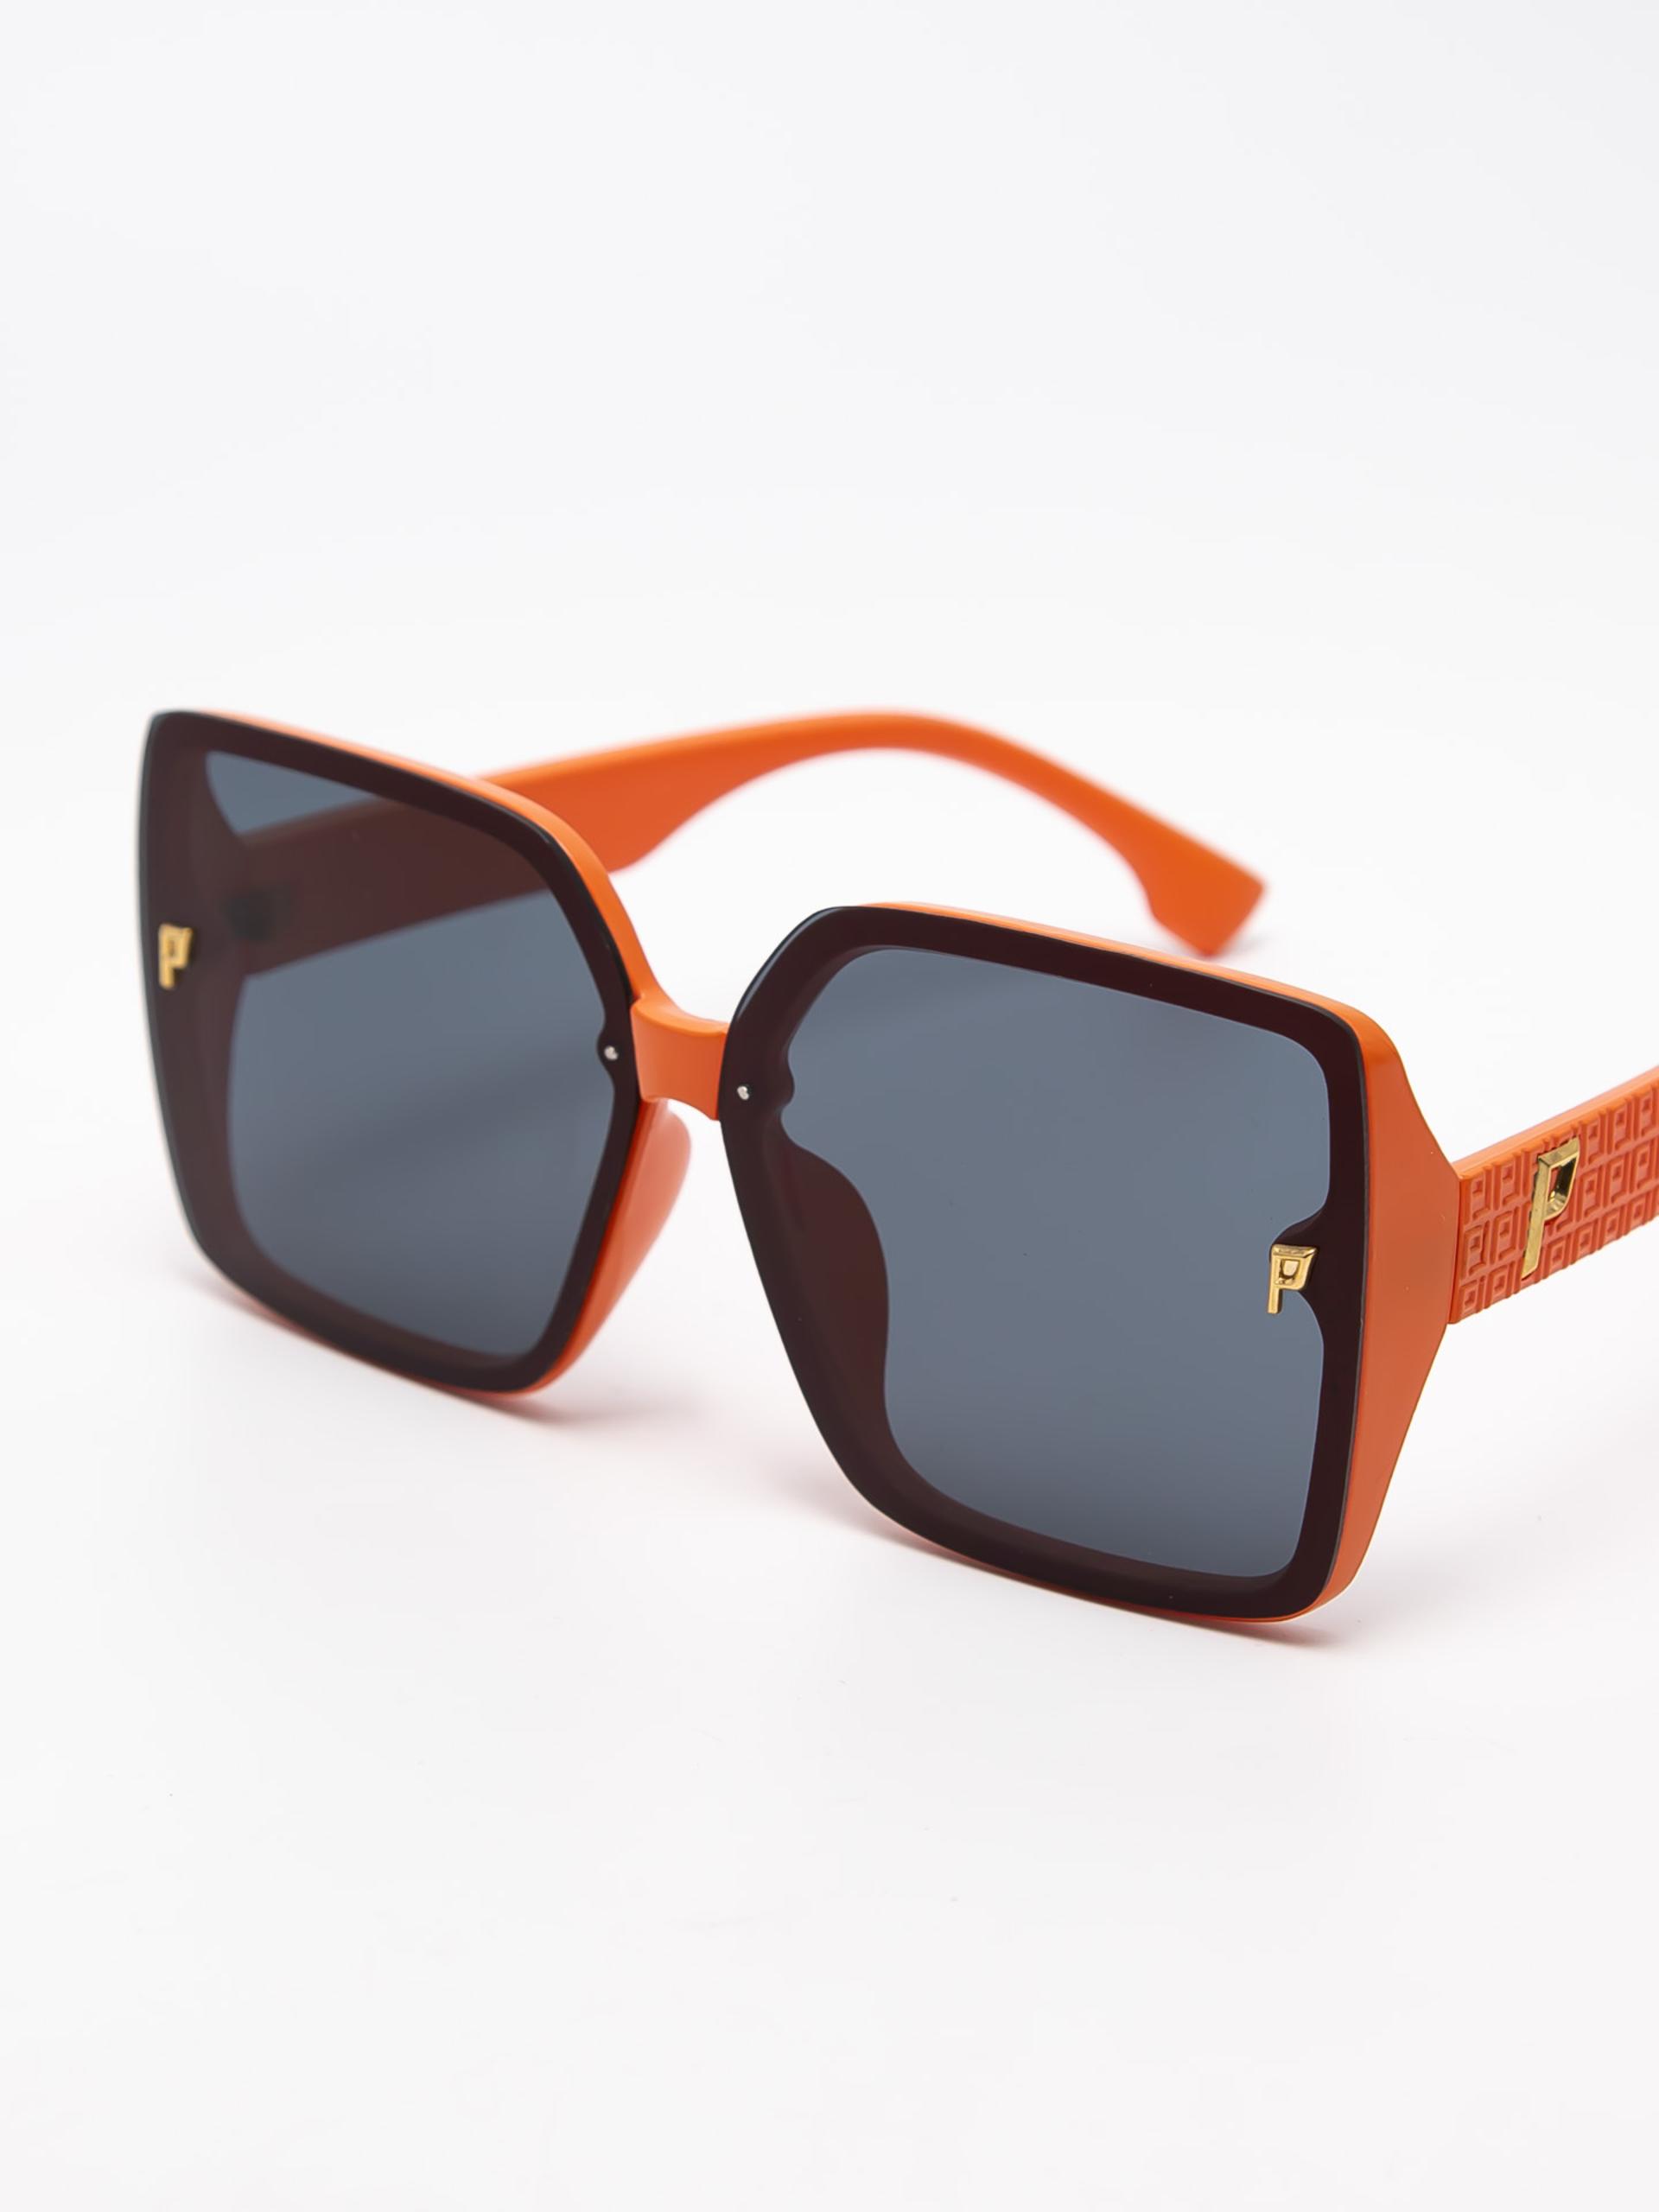 Mahsulot - “Солнцезащитные очки женские”